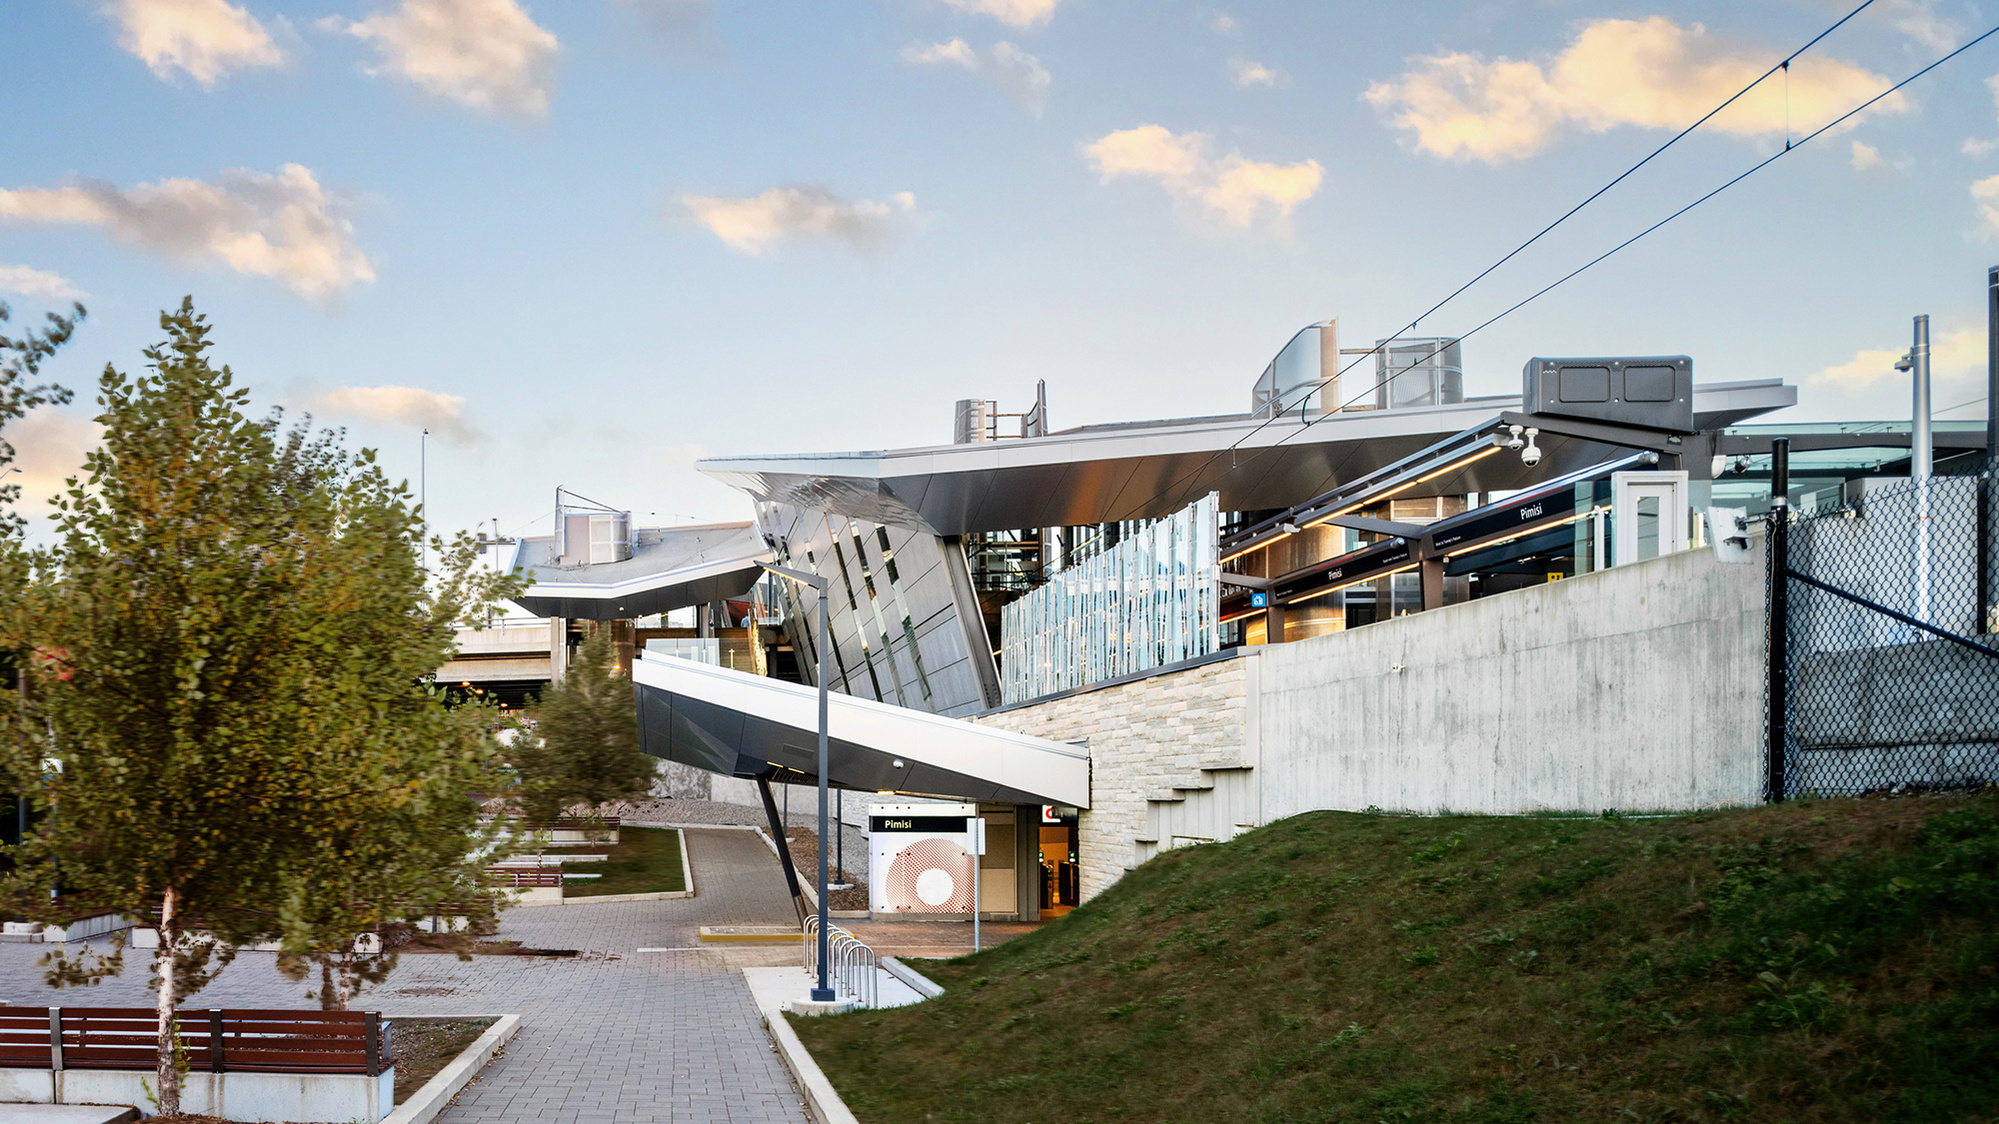 Pimisi station in Ottawa Architectural Photography by Frank Fenn IDEA3